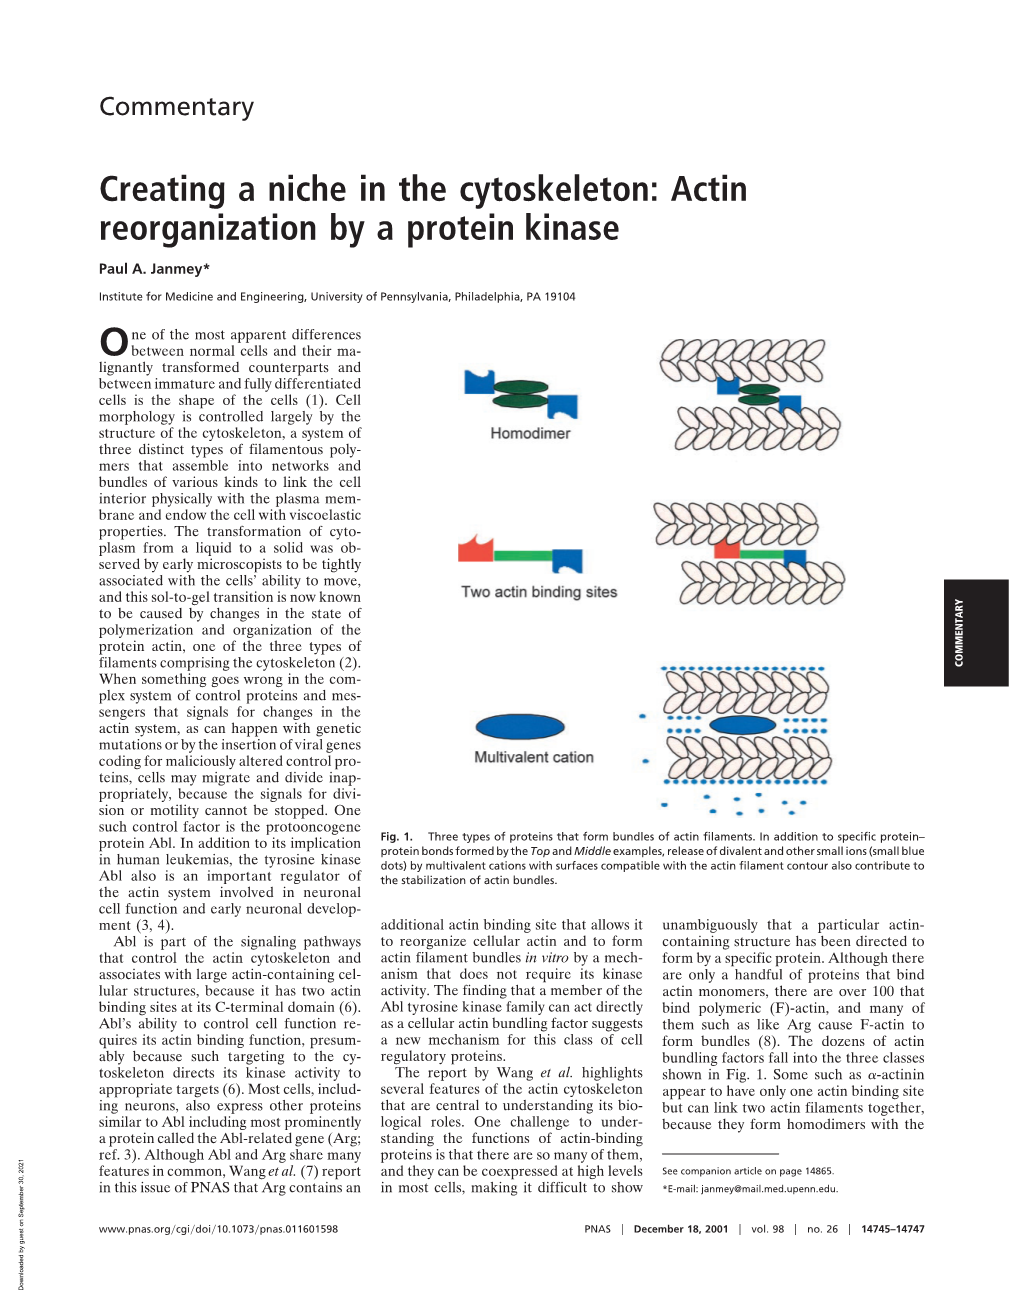 Actin Reorganization by a Protein Kinase